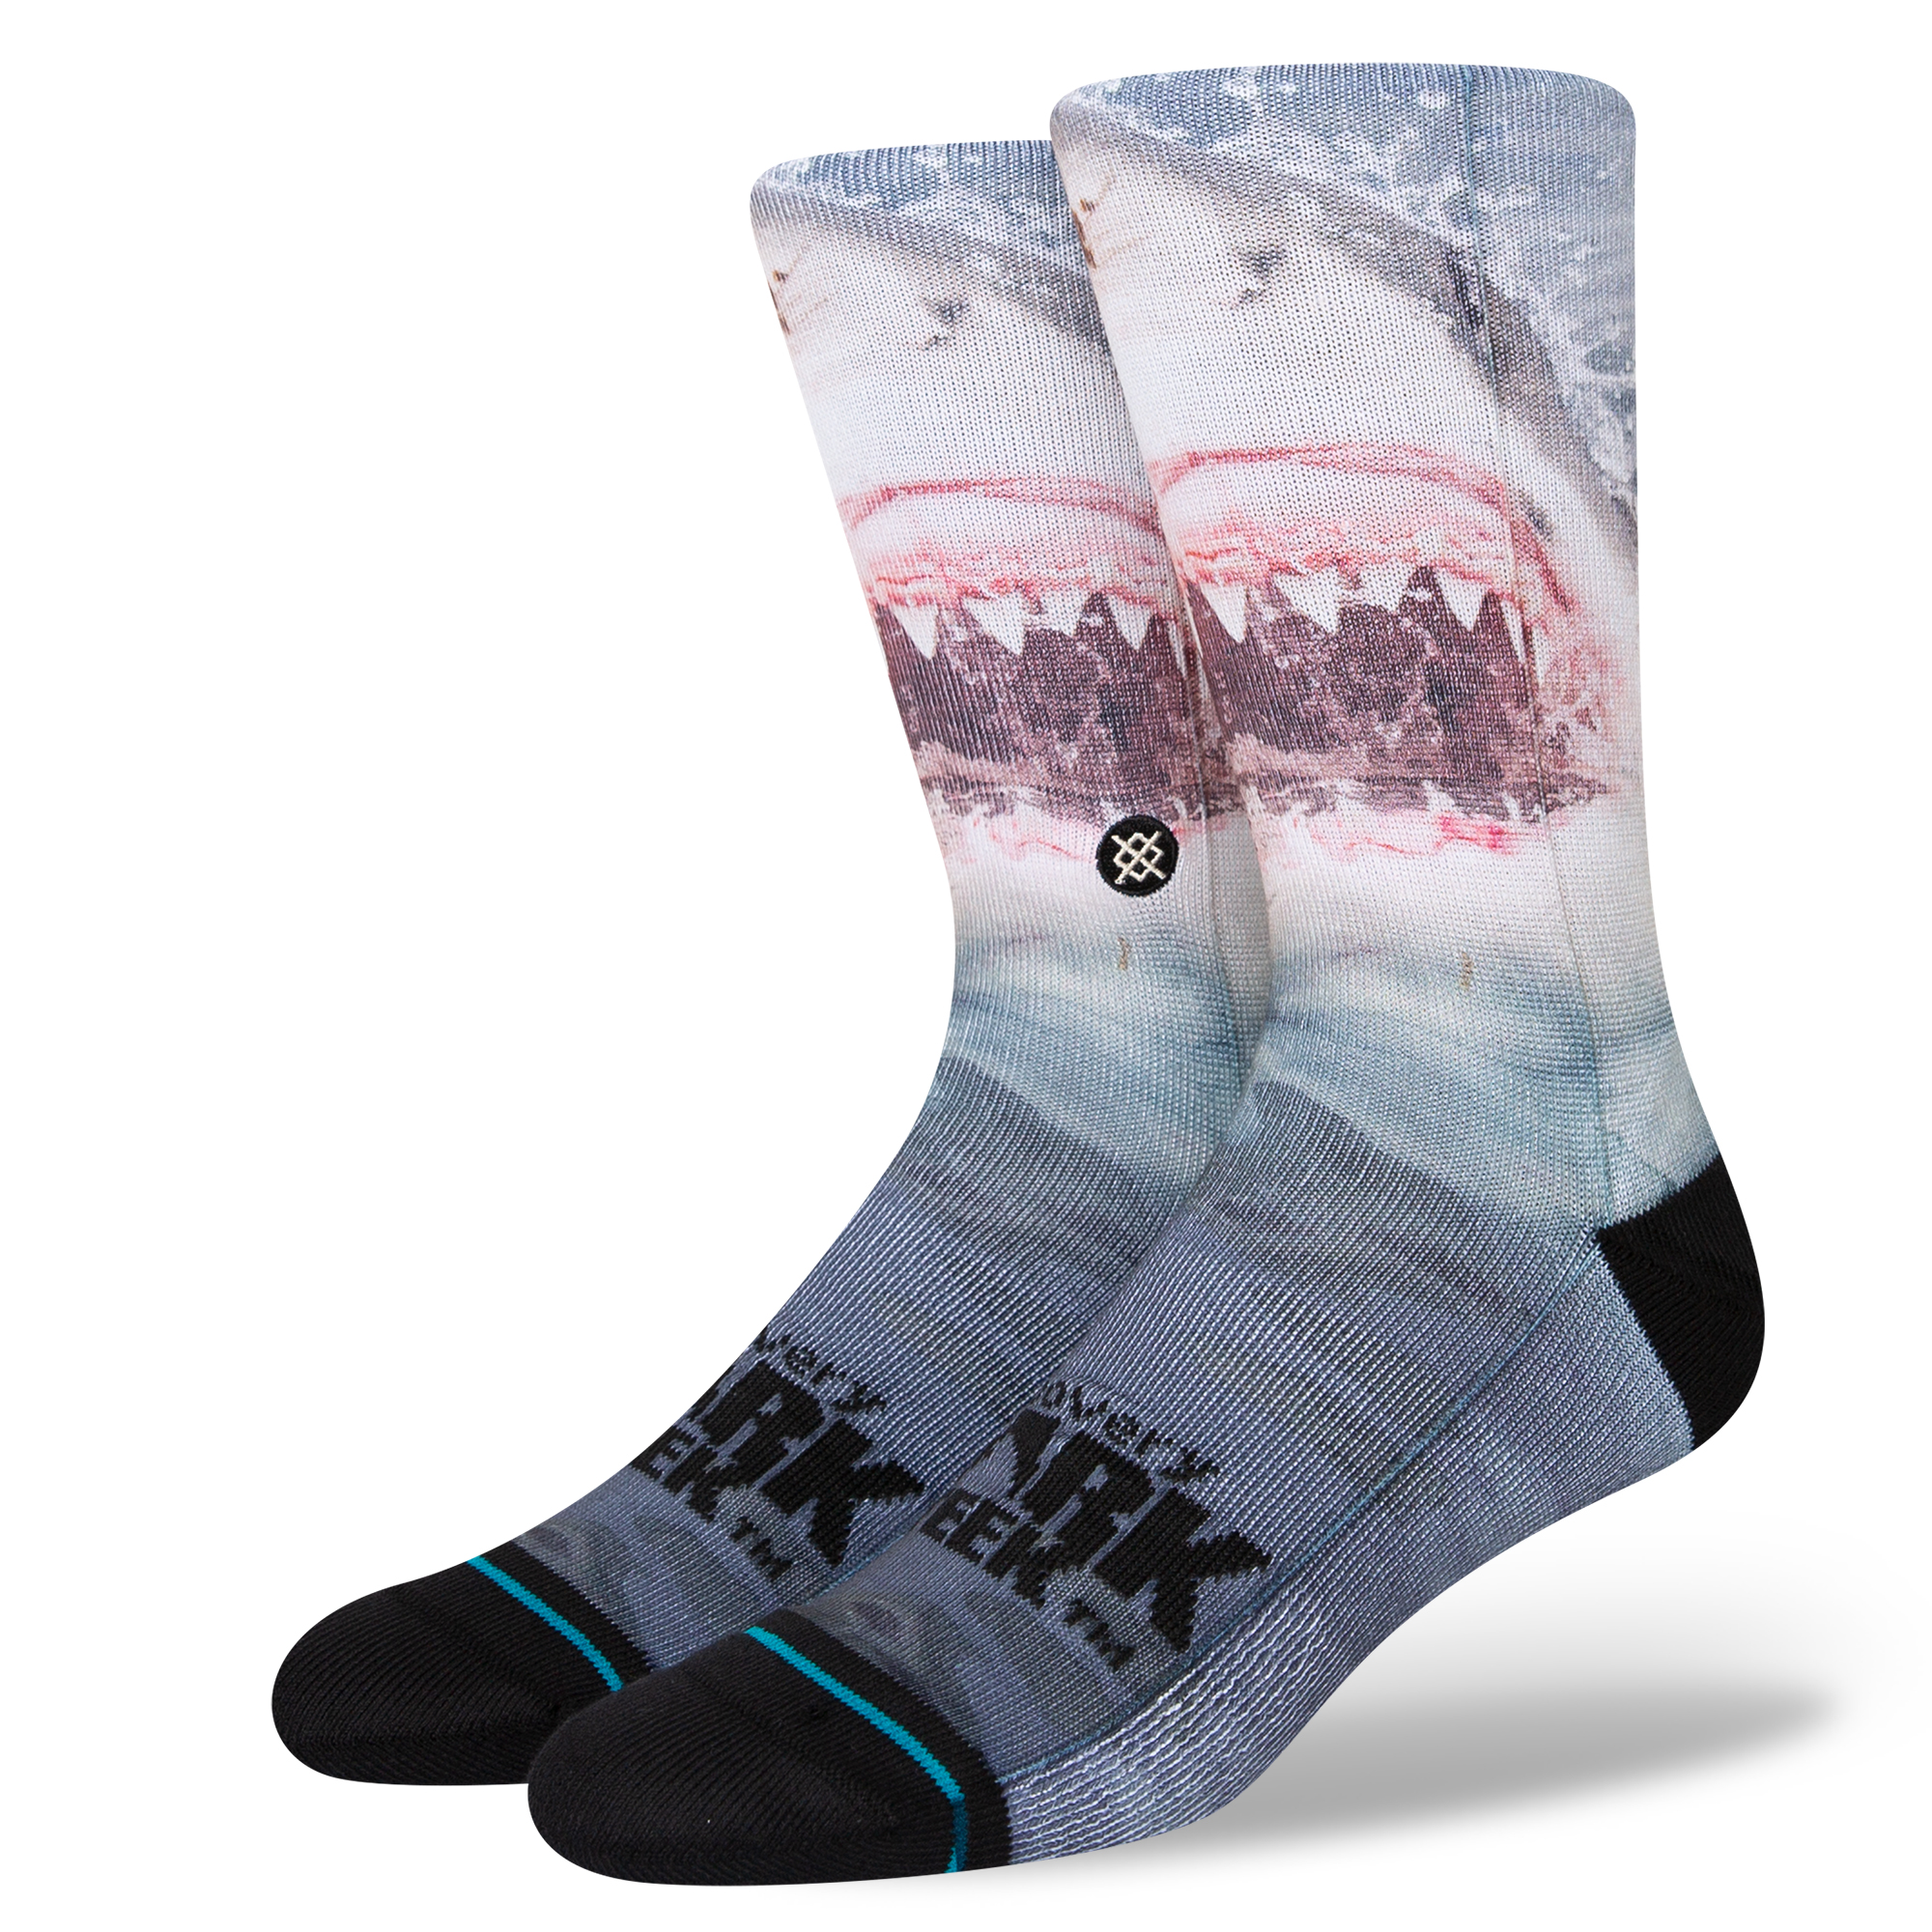 Shark Week X Stance Crew Socks | Stance